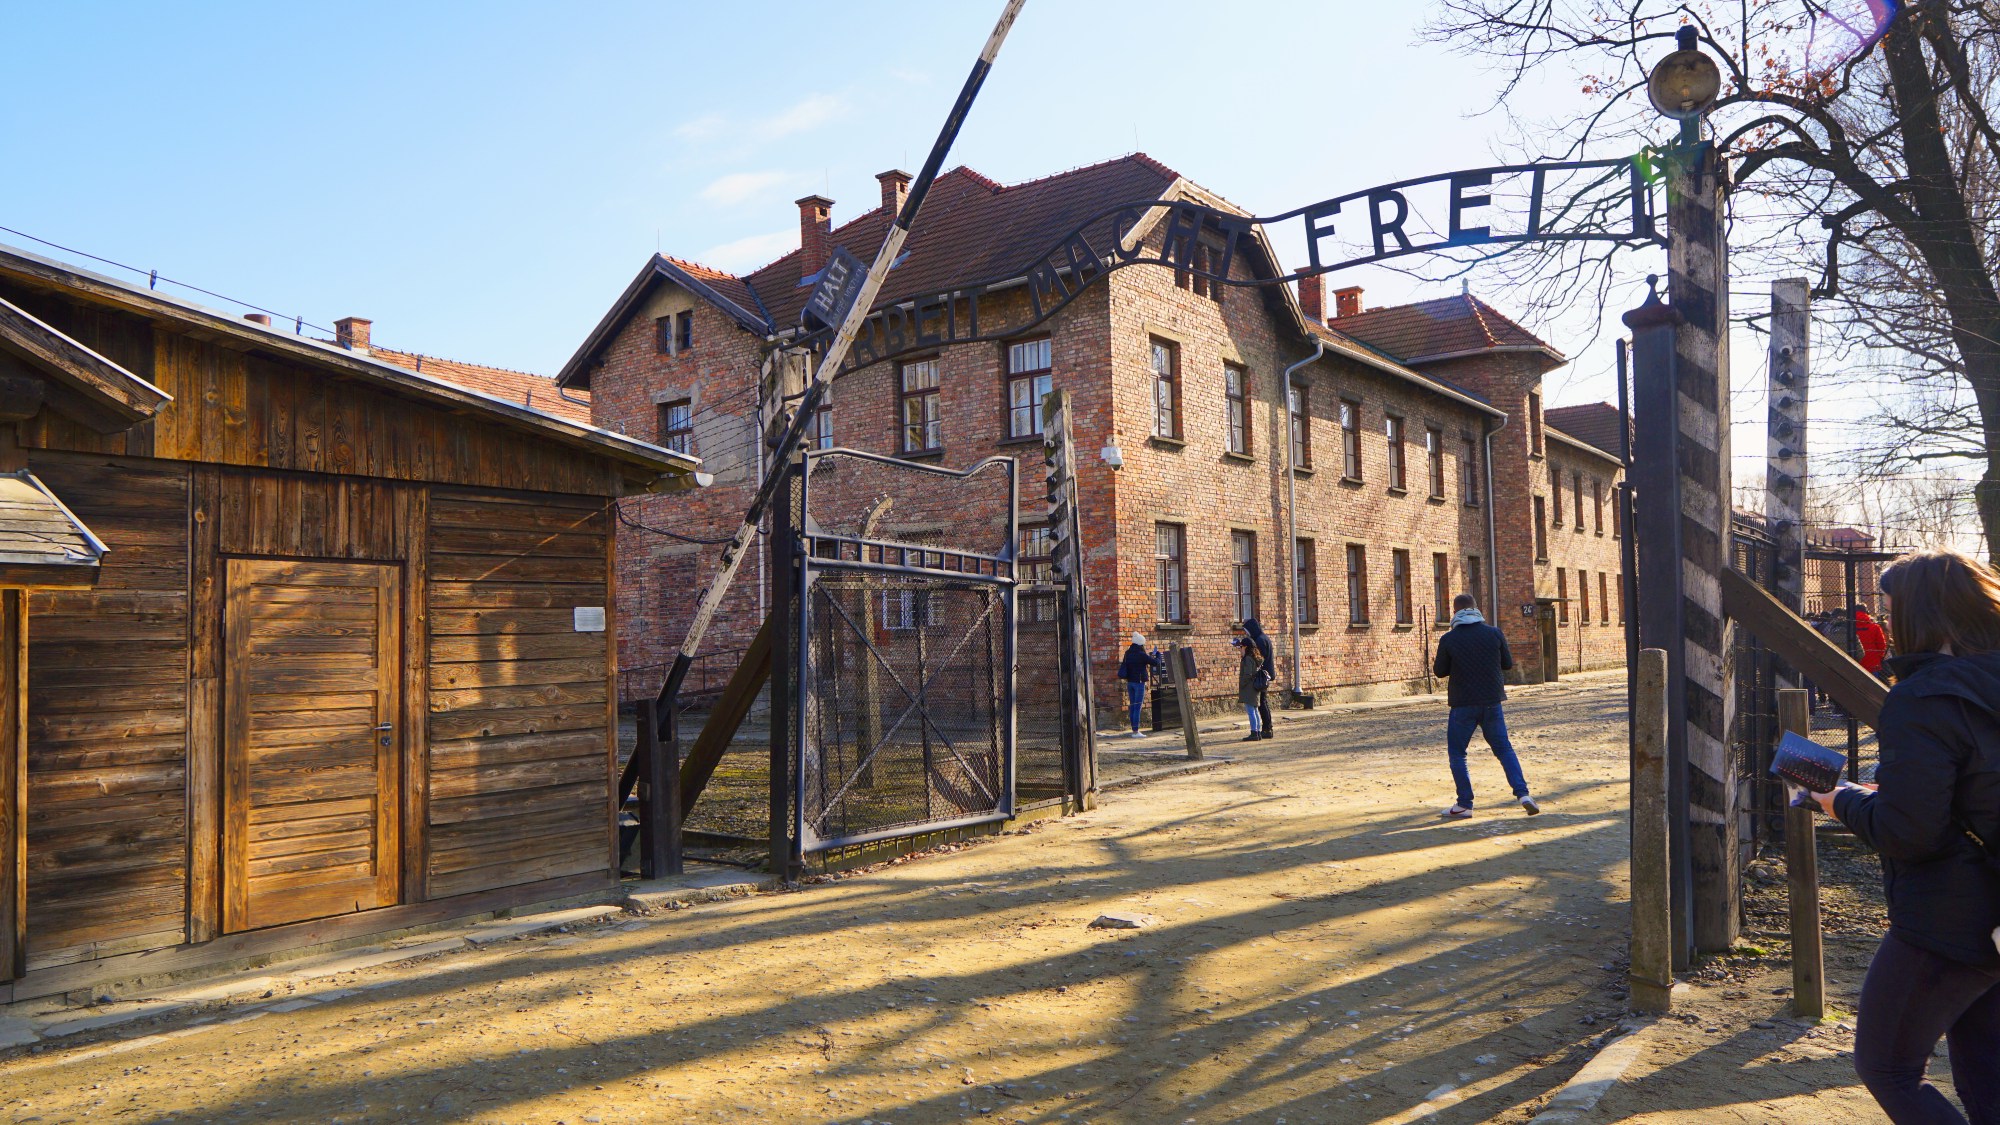 Auschwitz memorial and museum – symbol of terror and holocaust